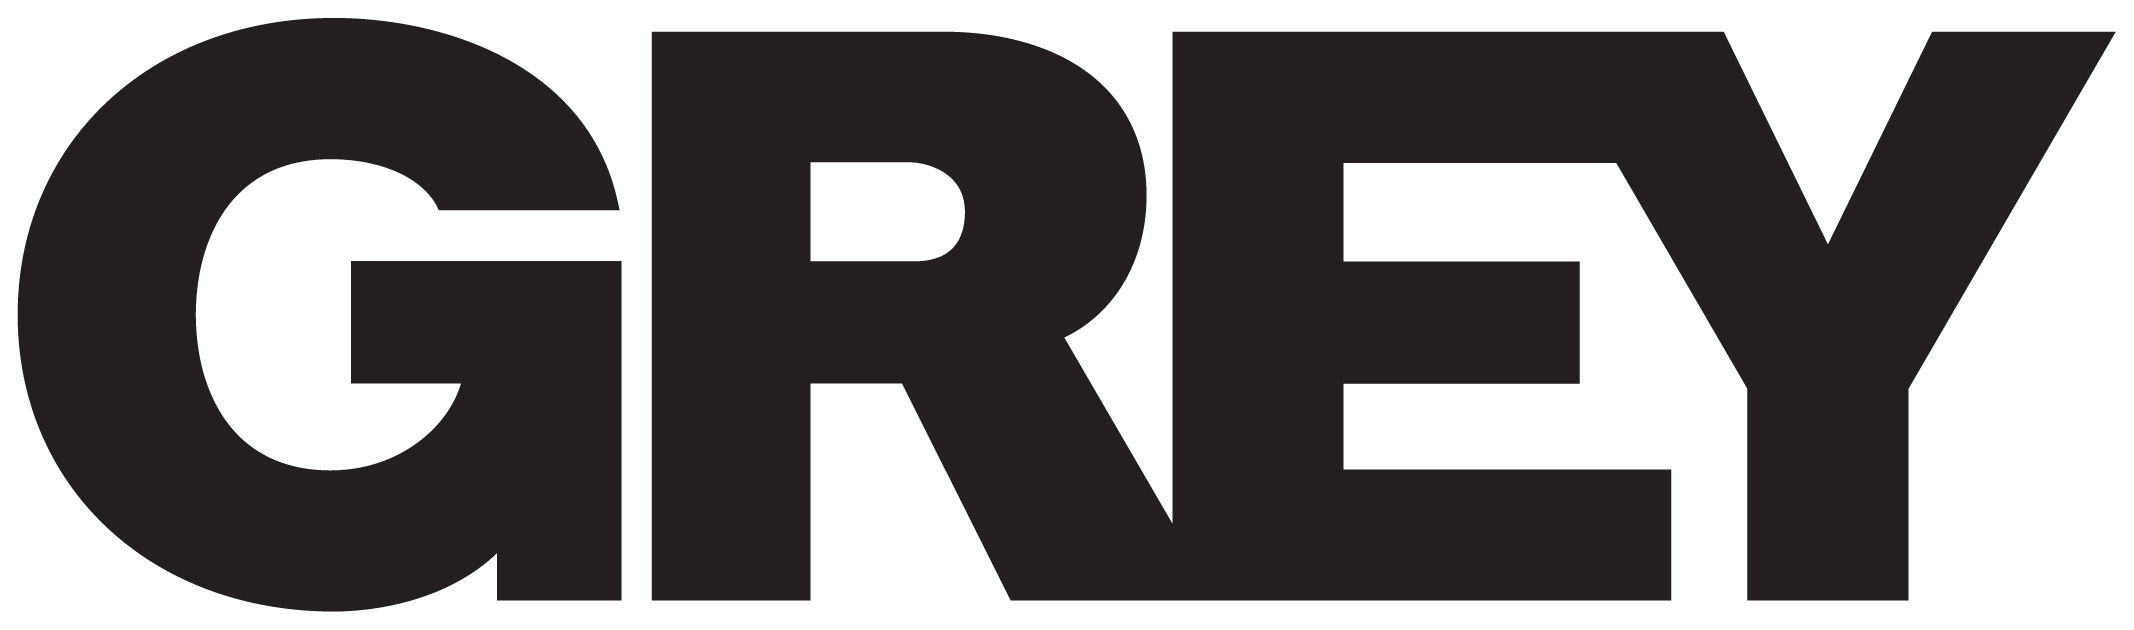 Grey_Group_logo-03